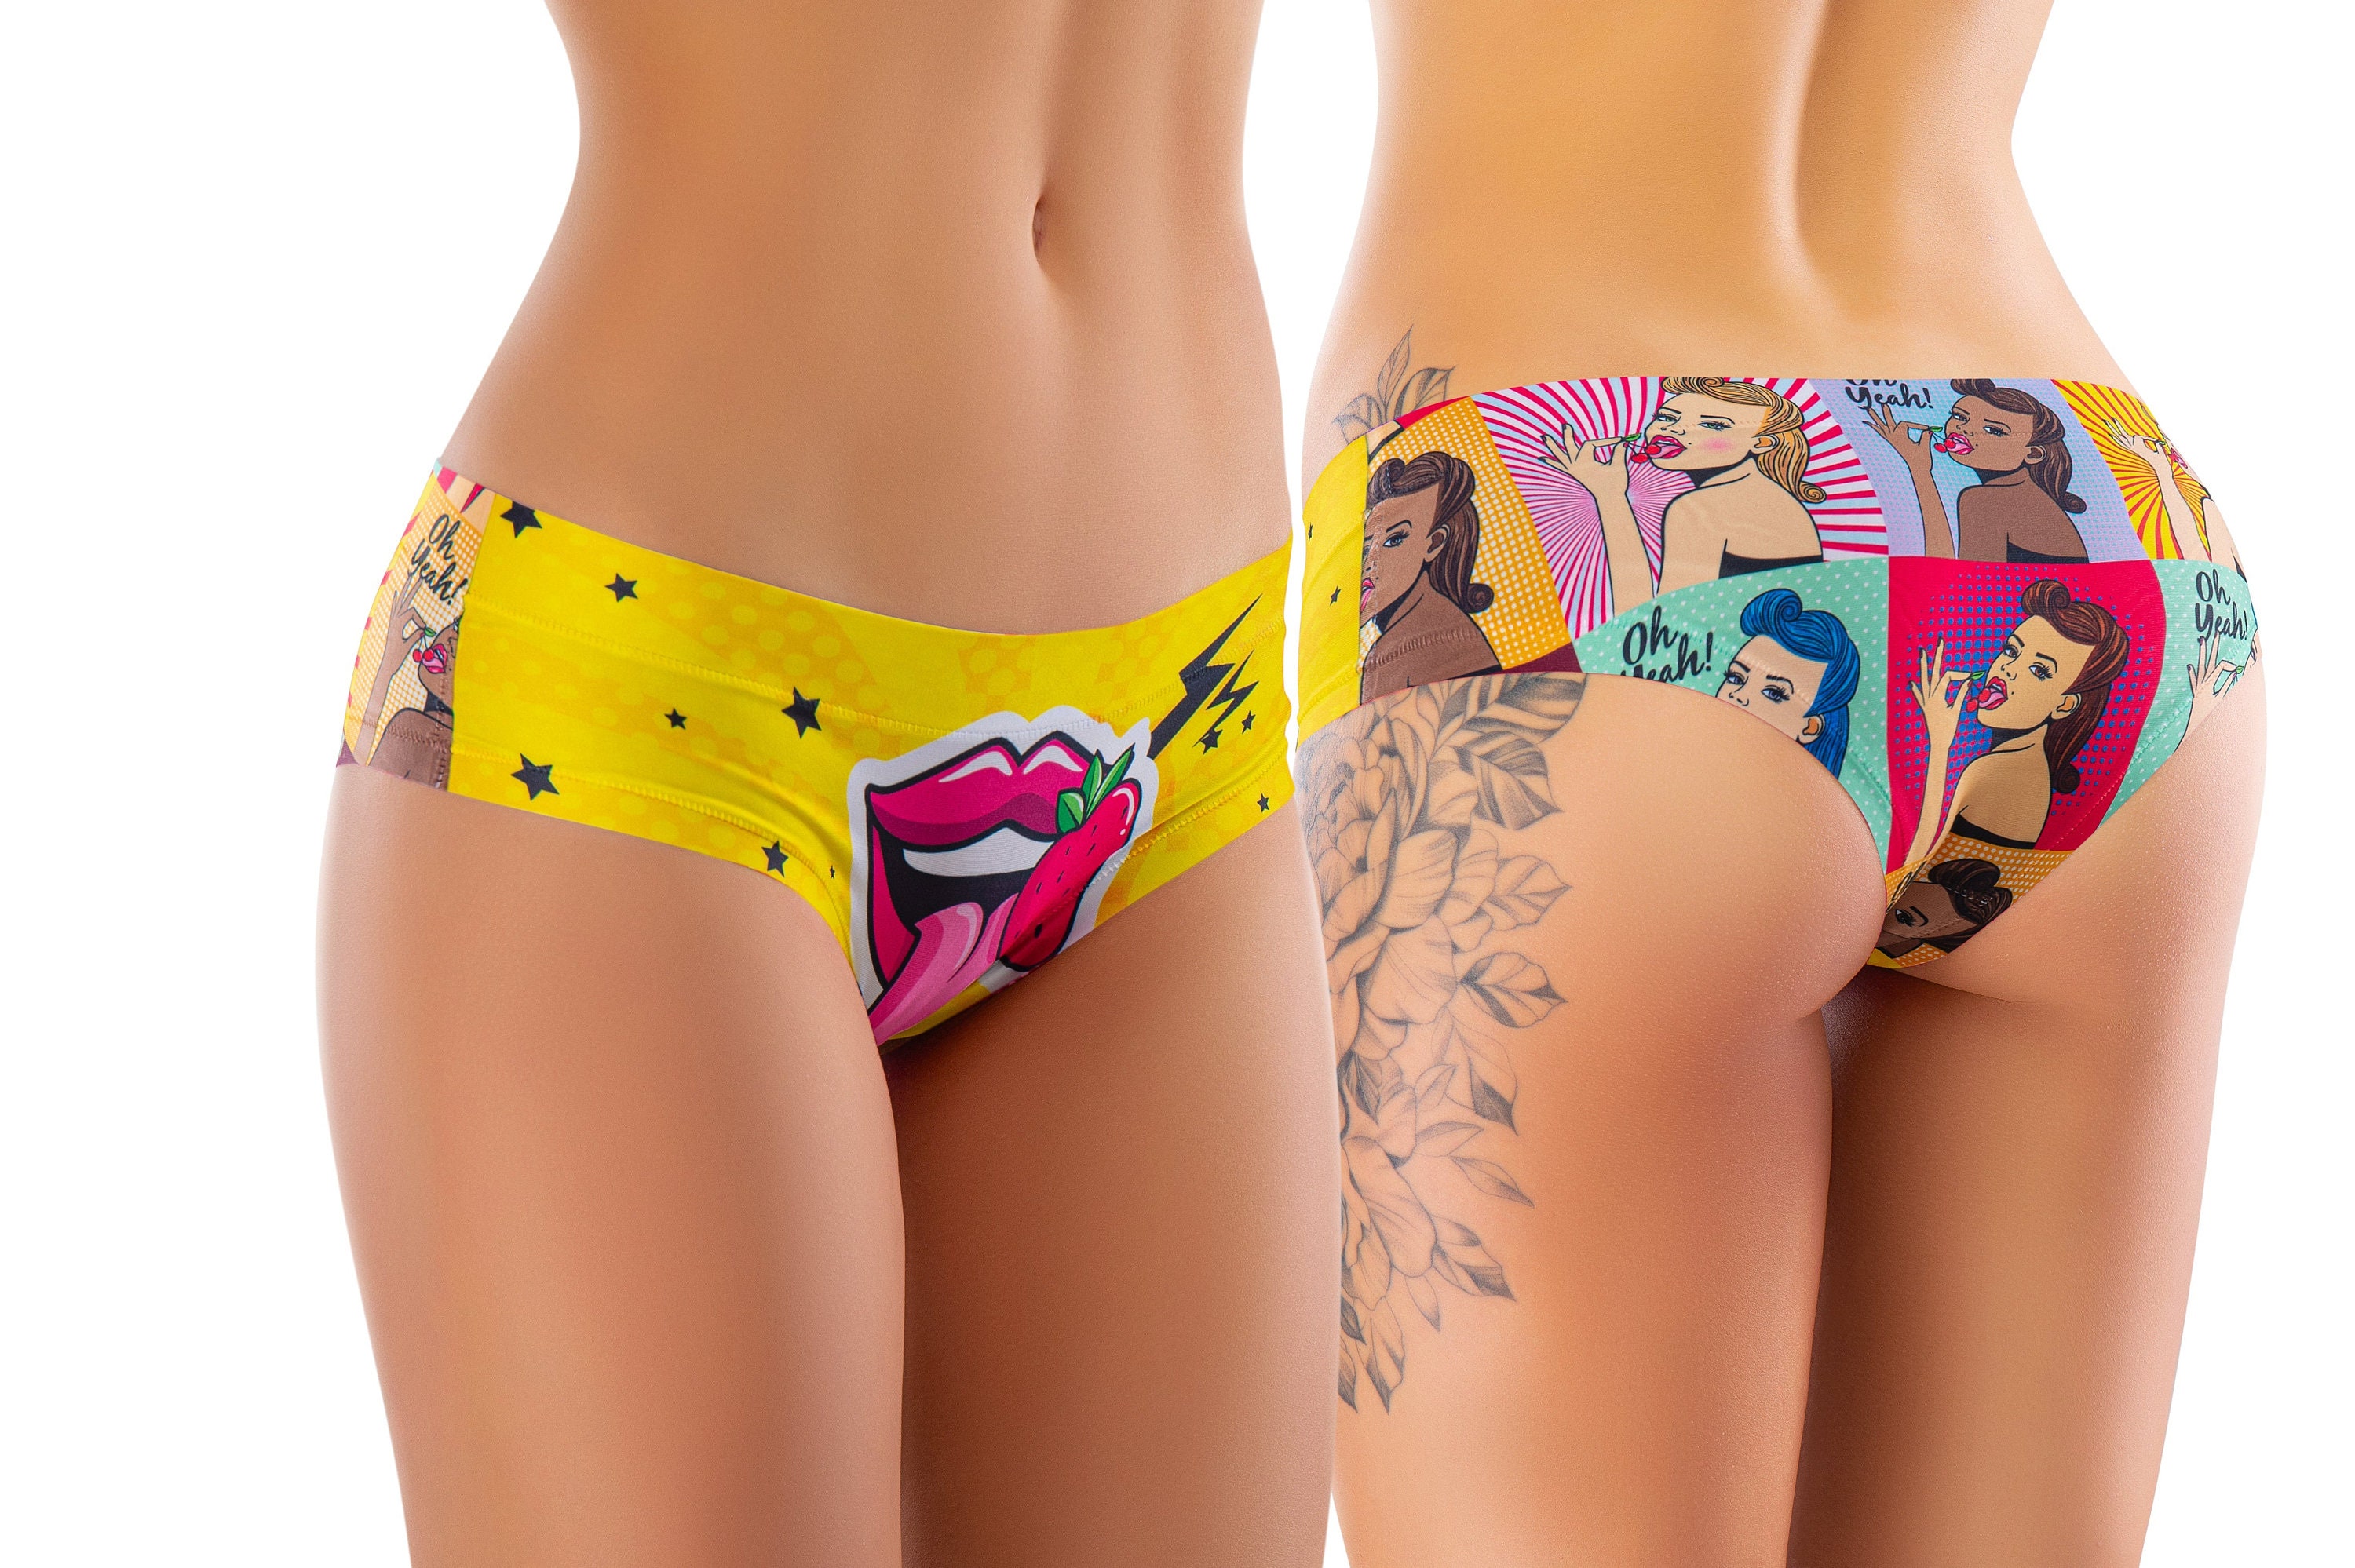 Best Deal for MODOQO 1 Panties Lingerie Underwear Low-Waist Temptation